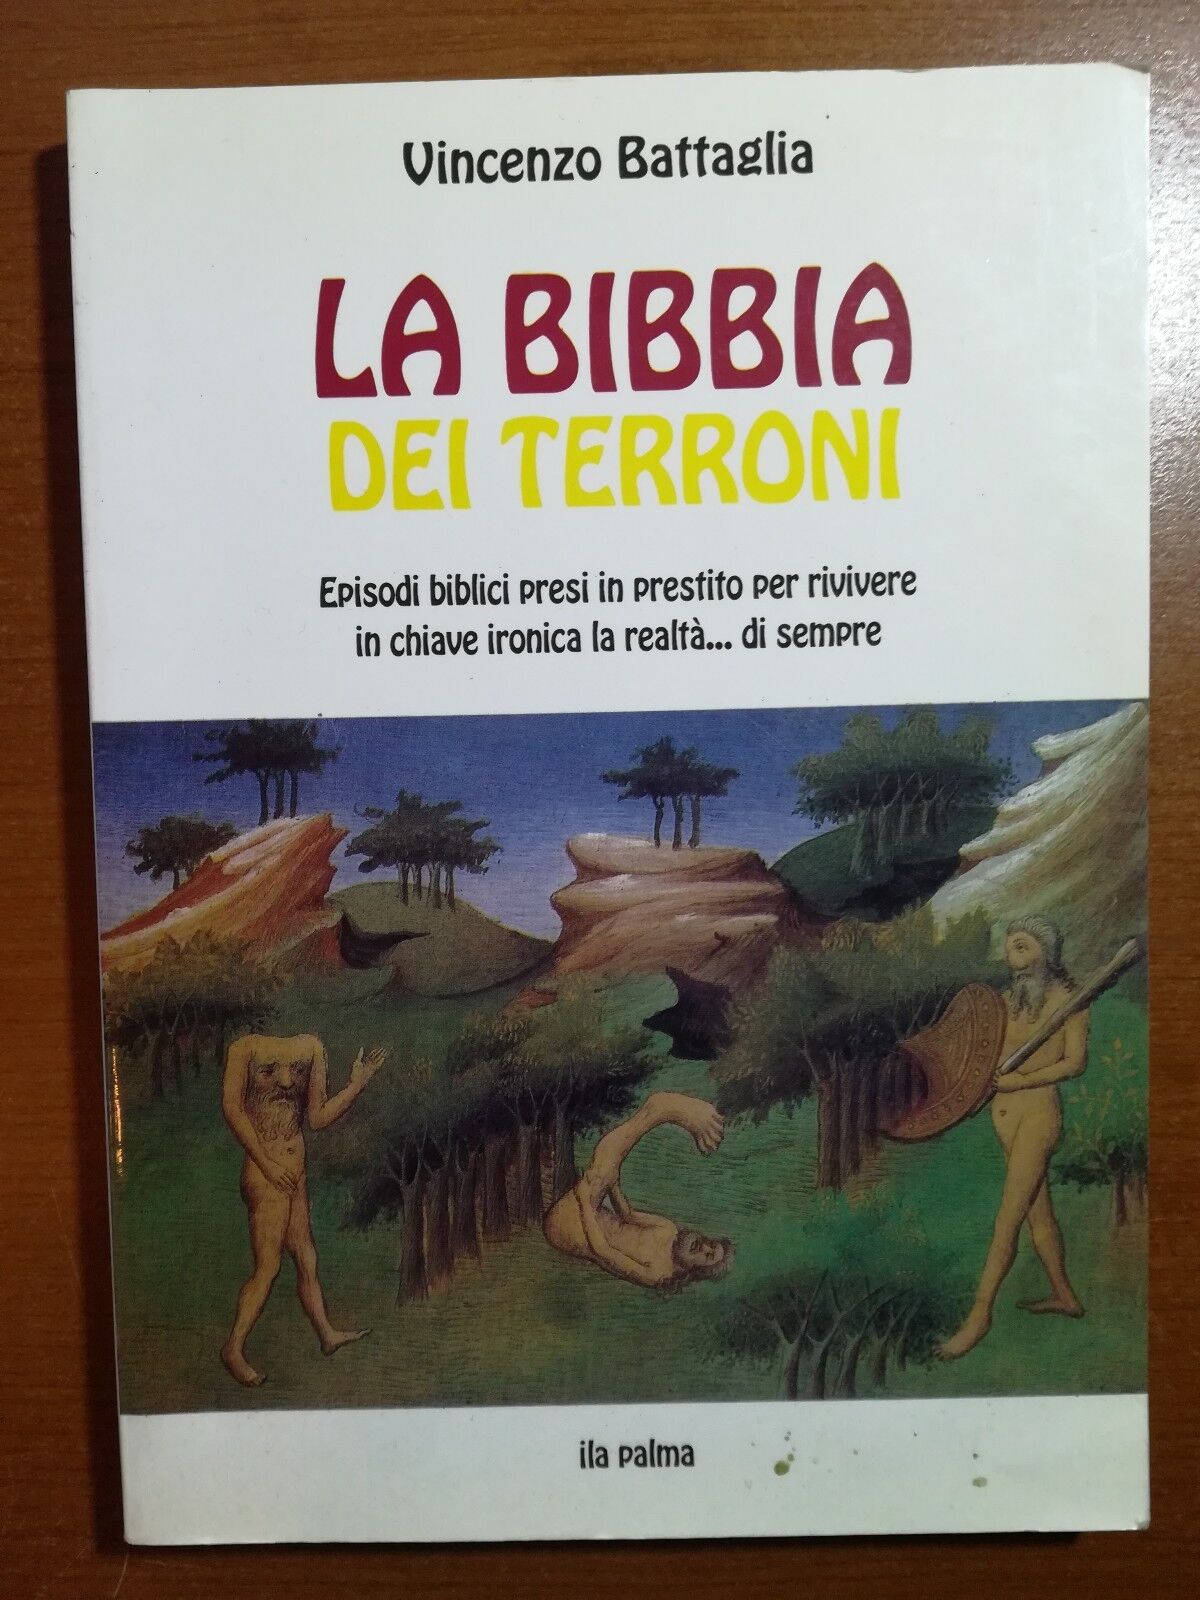 La bibbia dei terroni - Vincenzo Battaglia - Ila palma - 1996 - M